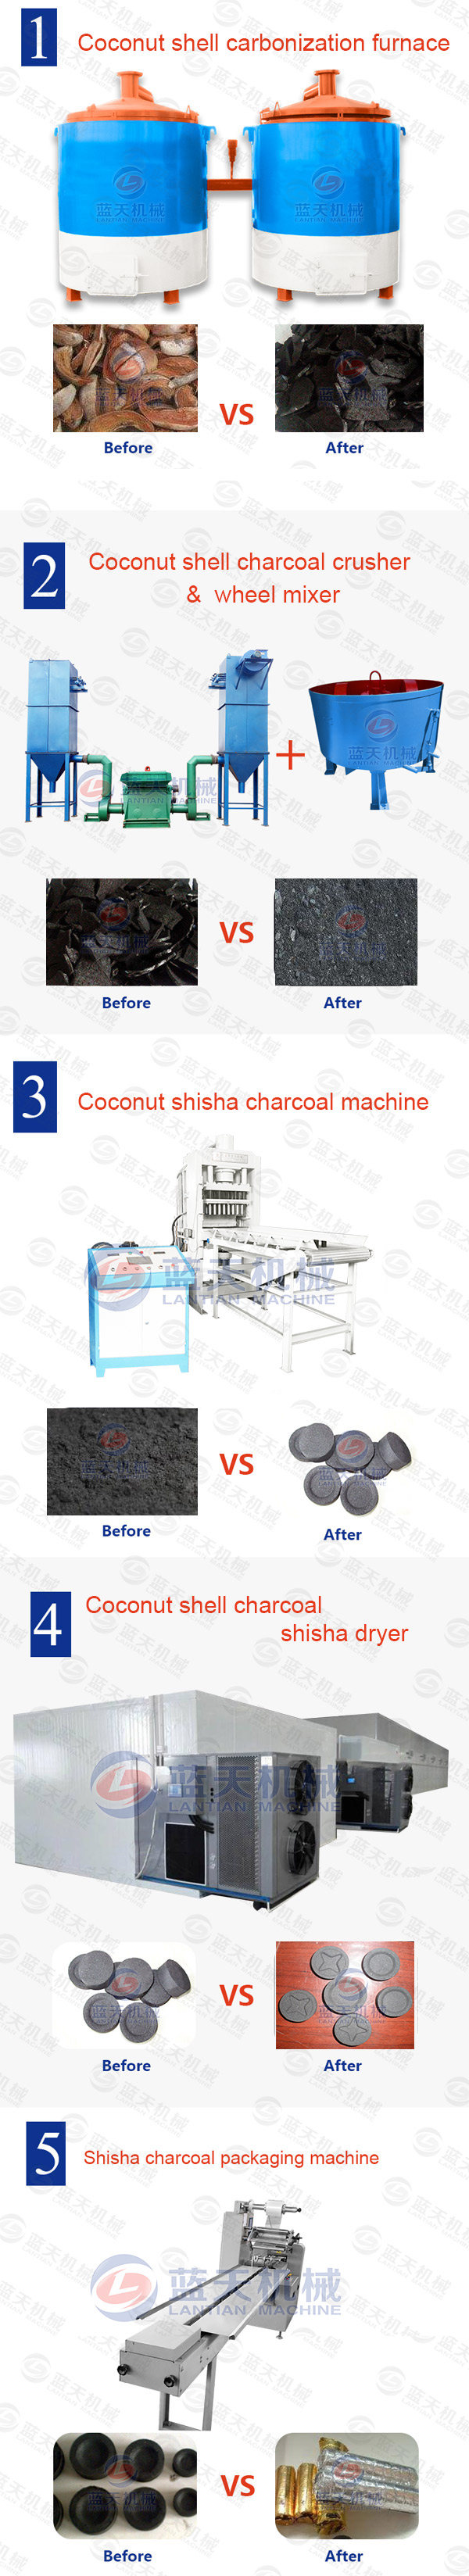 coconut shisha charcoal equipment